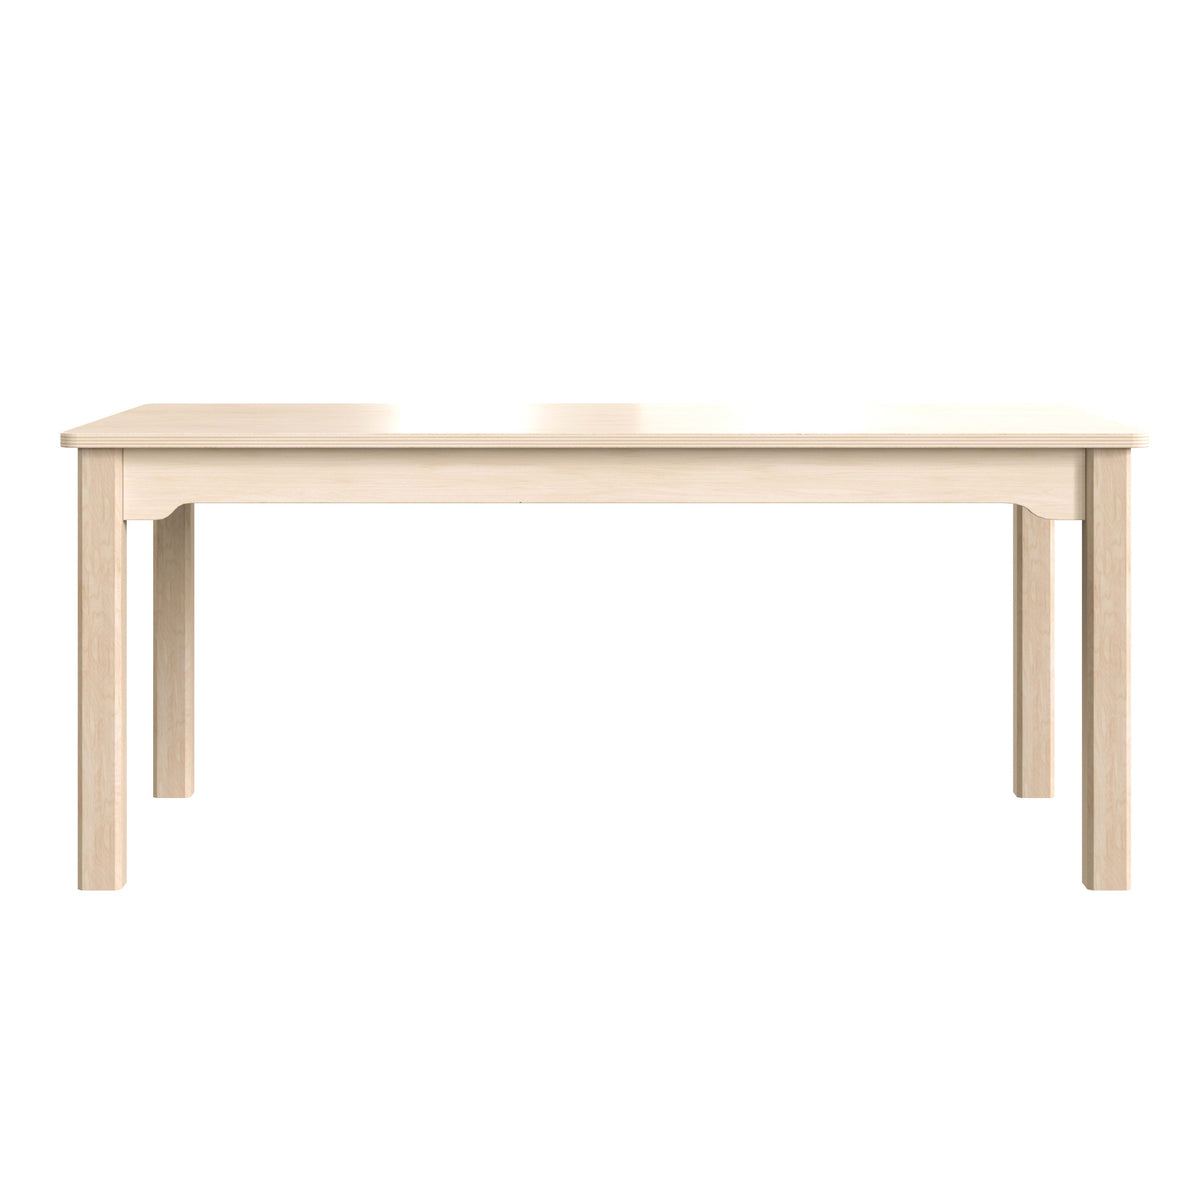 Commercial 23.5 x 47.25 Rectangular Wooden Classroom Activity Table - Beech